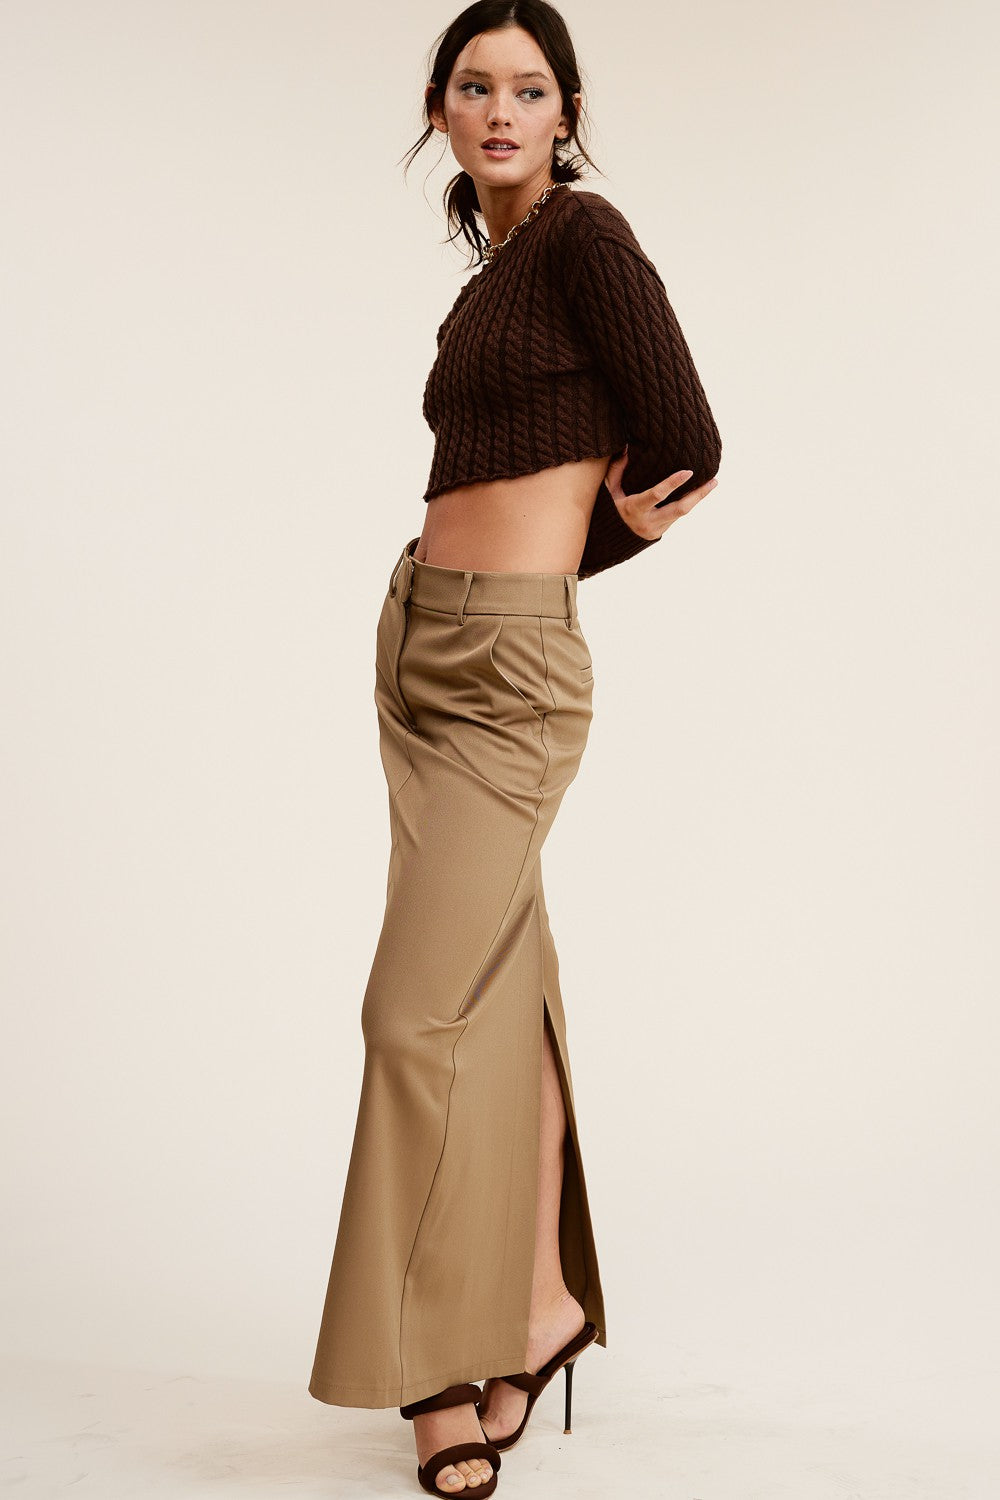 Lappiel Women's Long Skirt